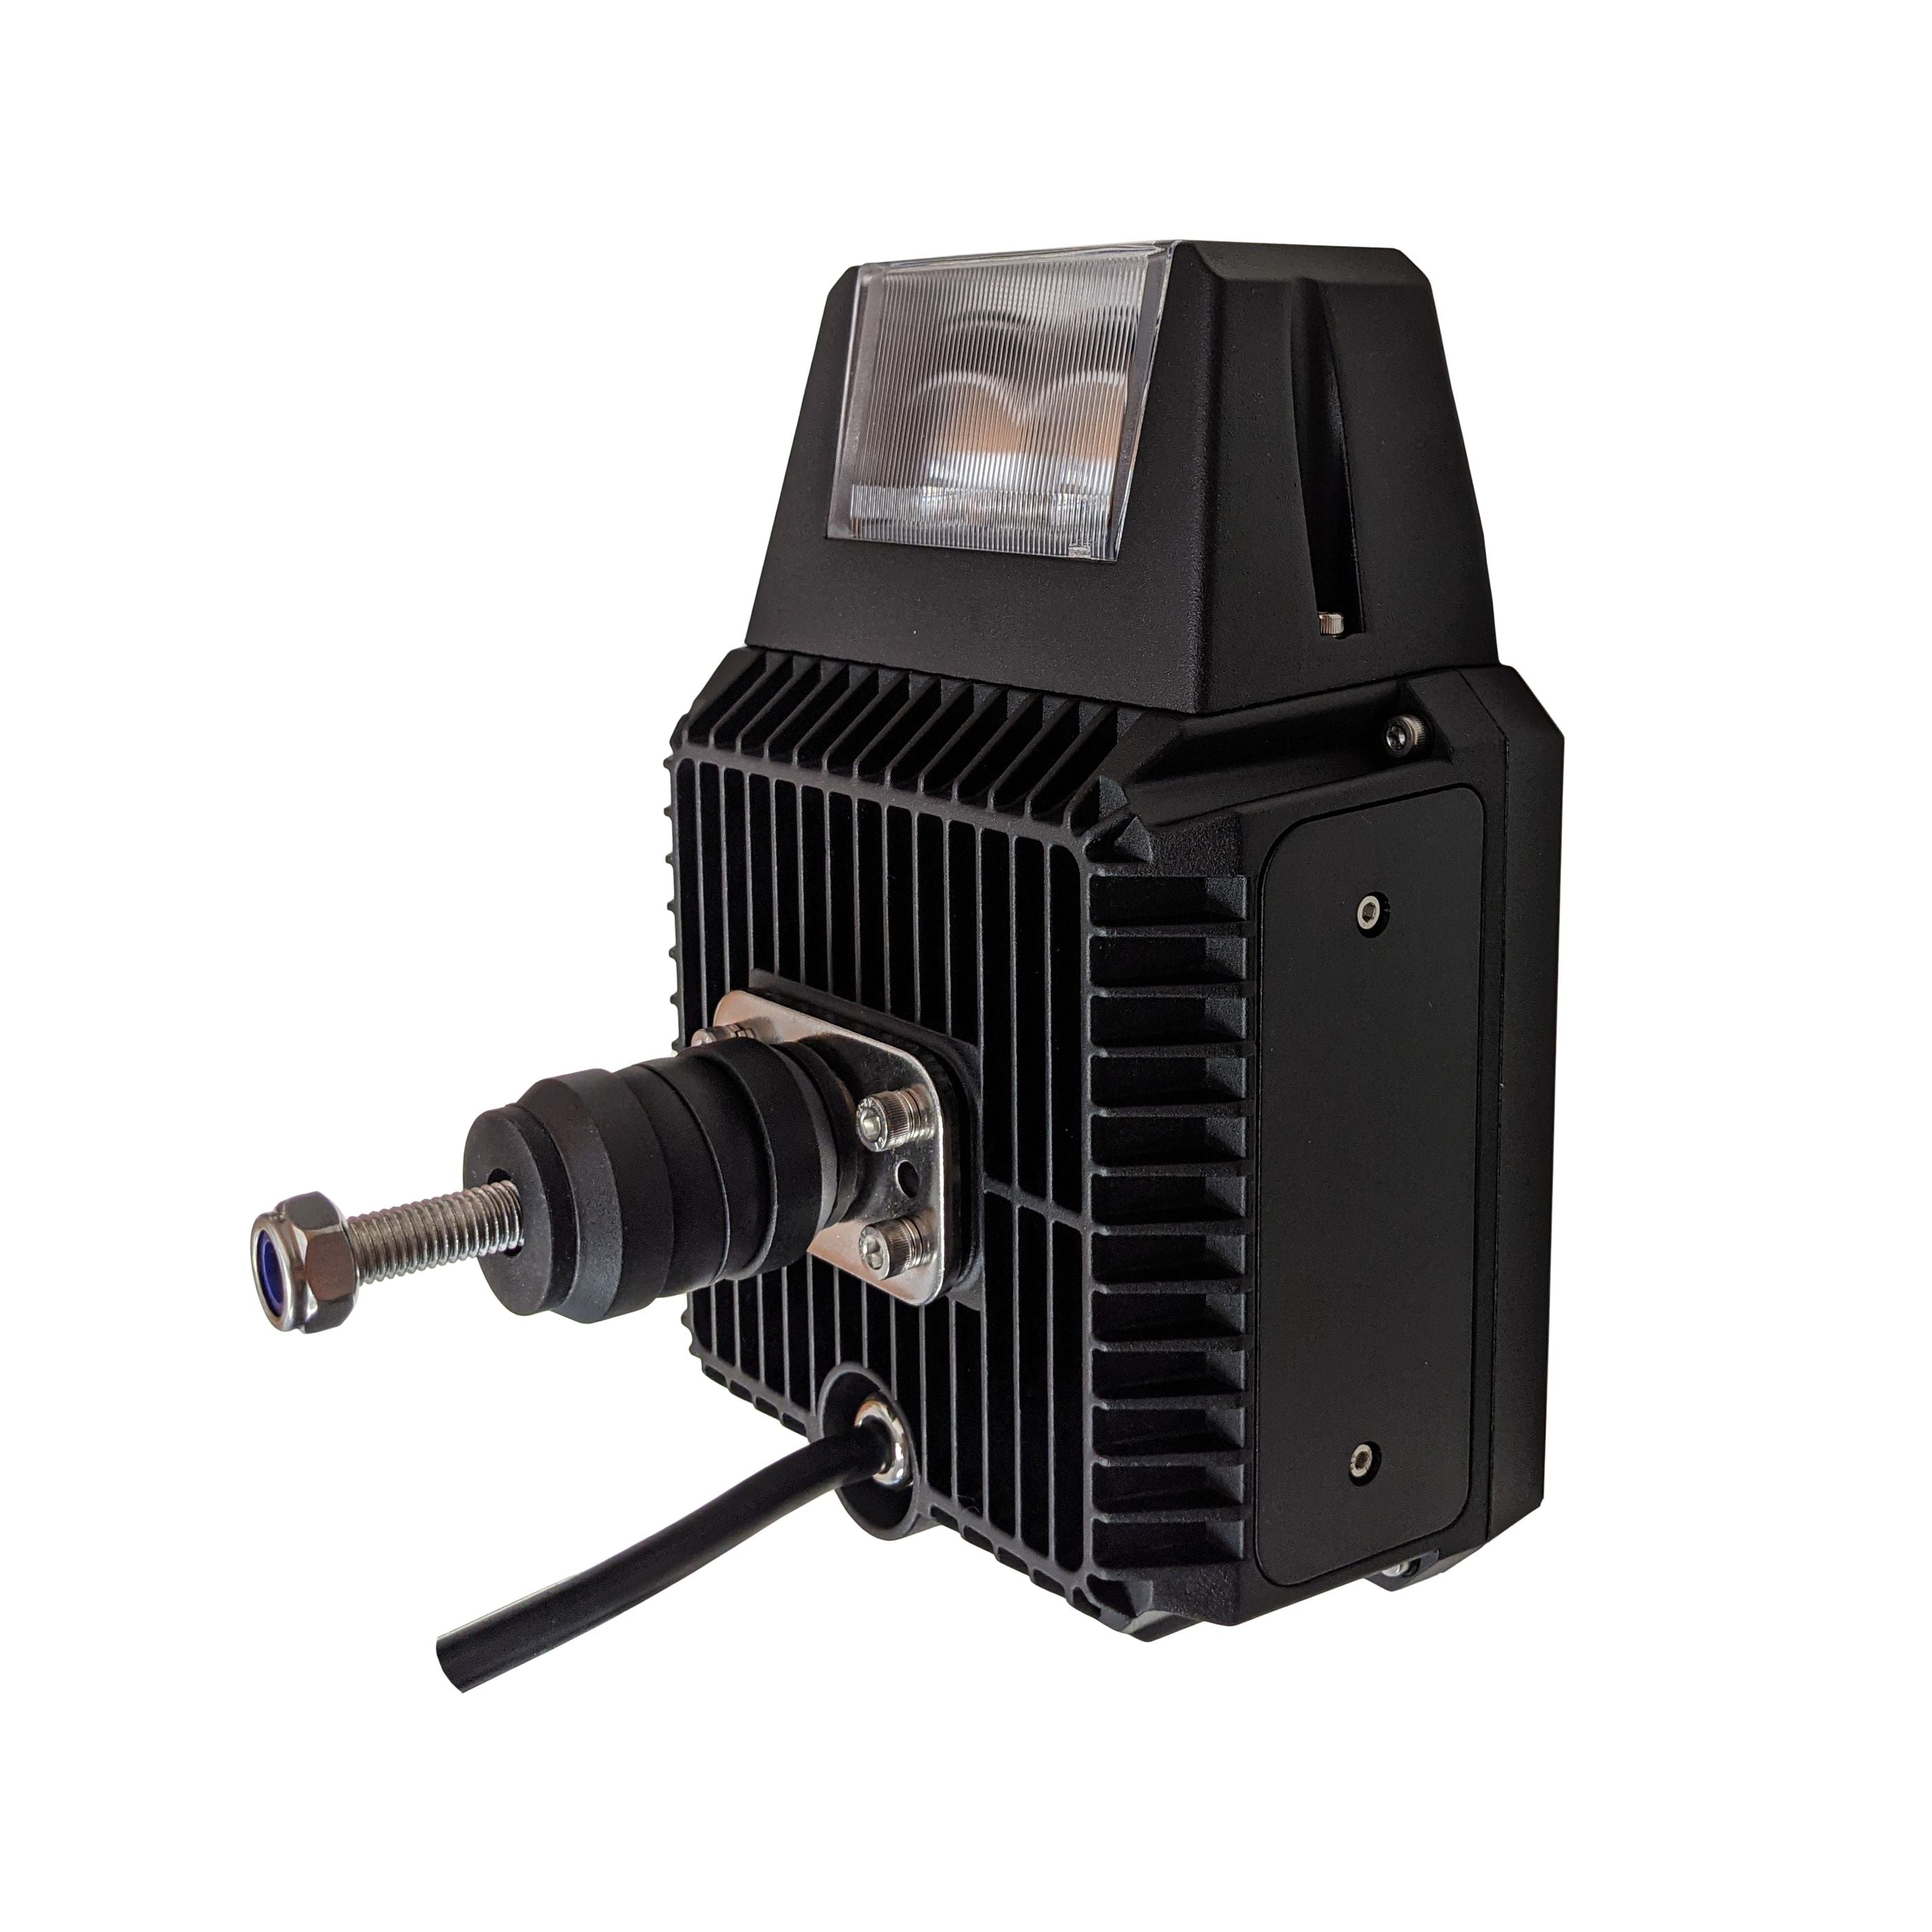 Unibond LWP6800H - Heated Lens LED Snow Plow Light With AUTO ON/OFF Temperature Sensor